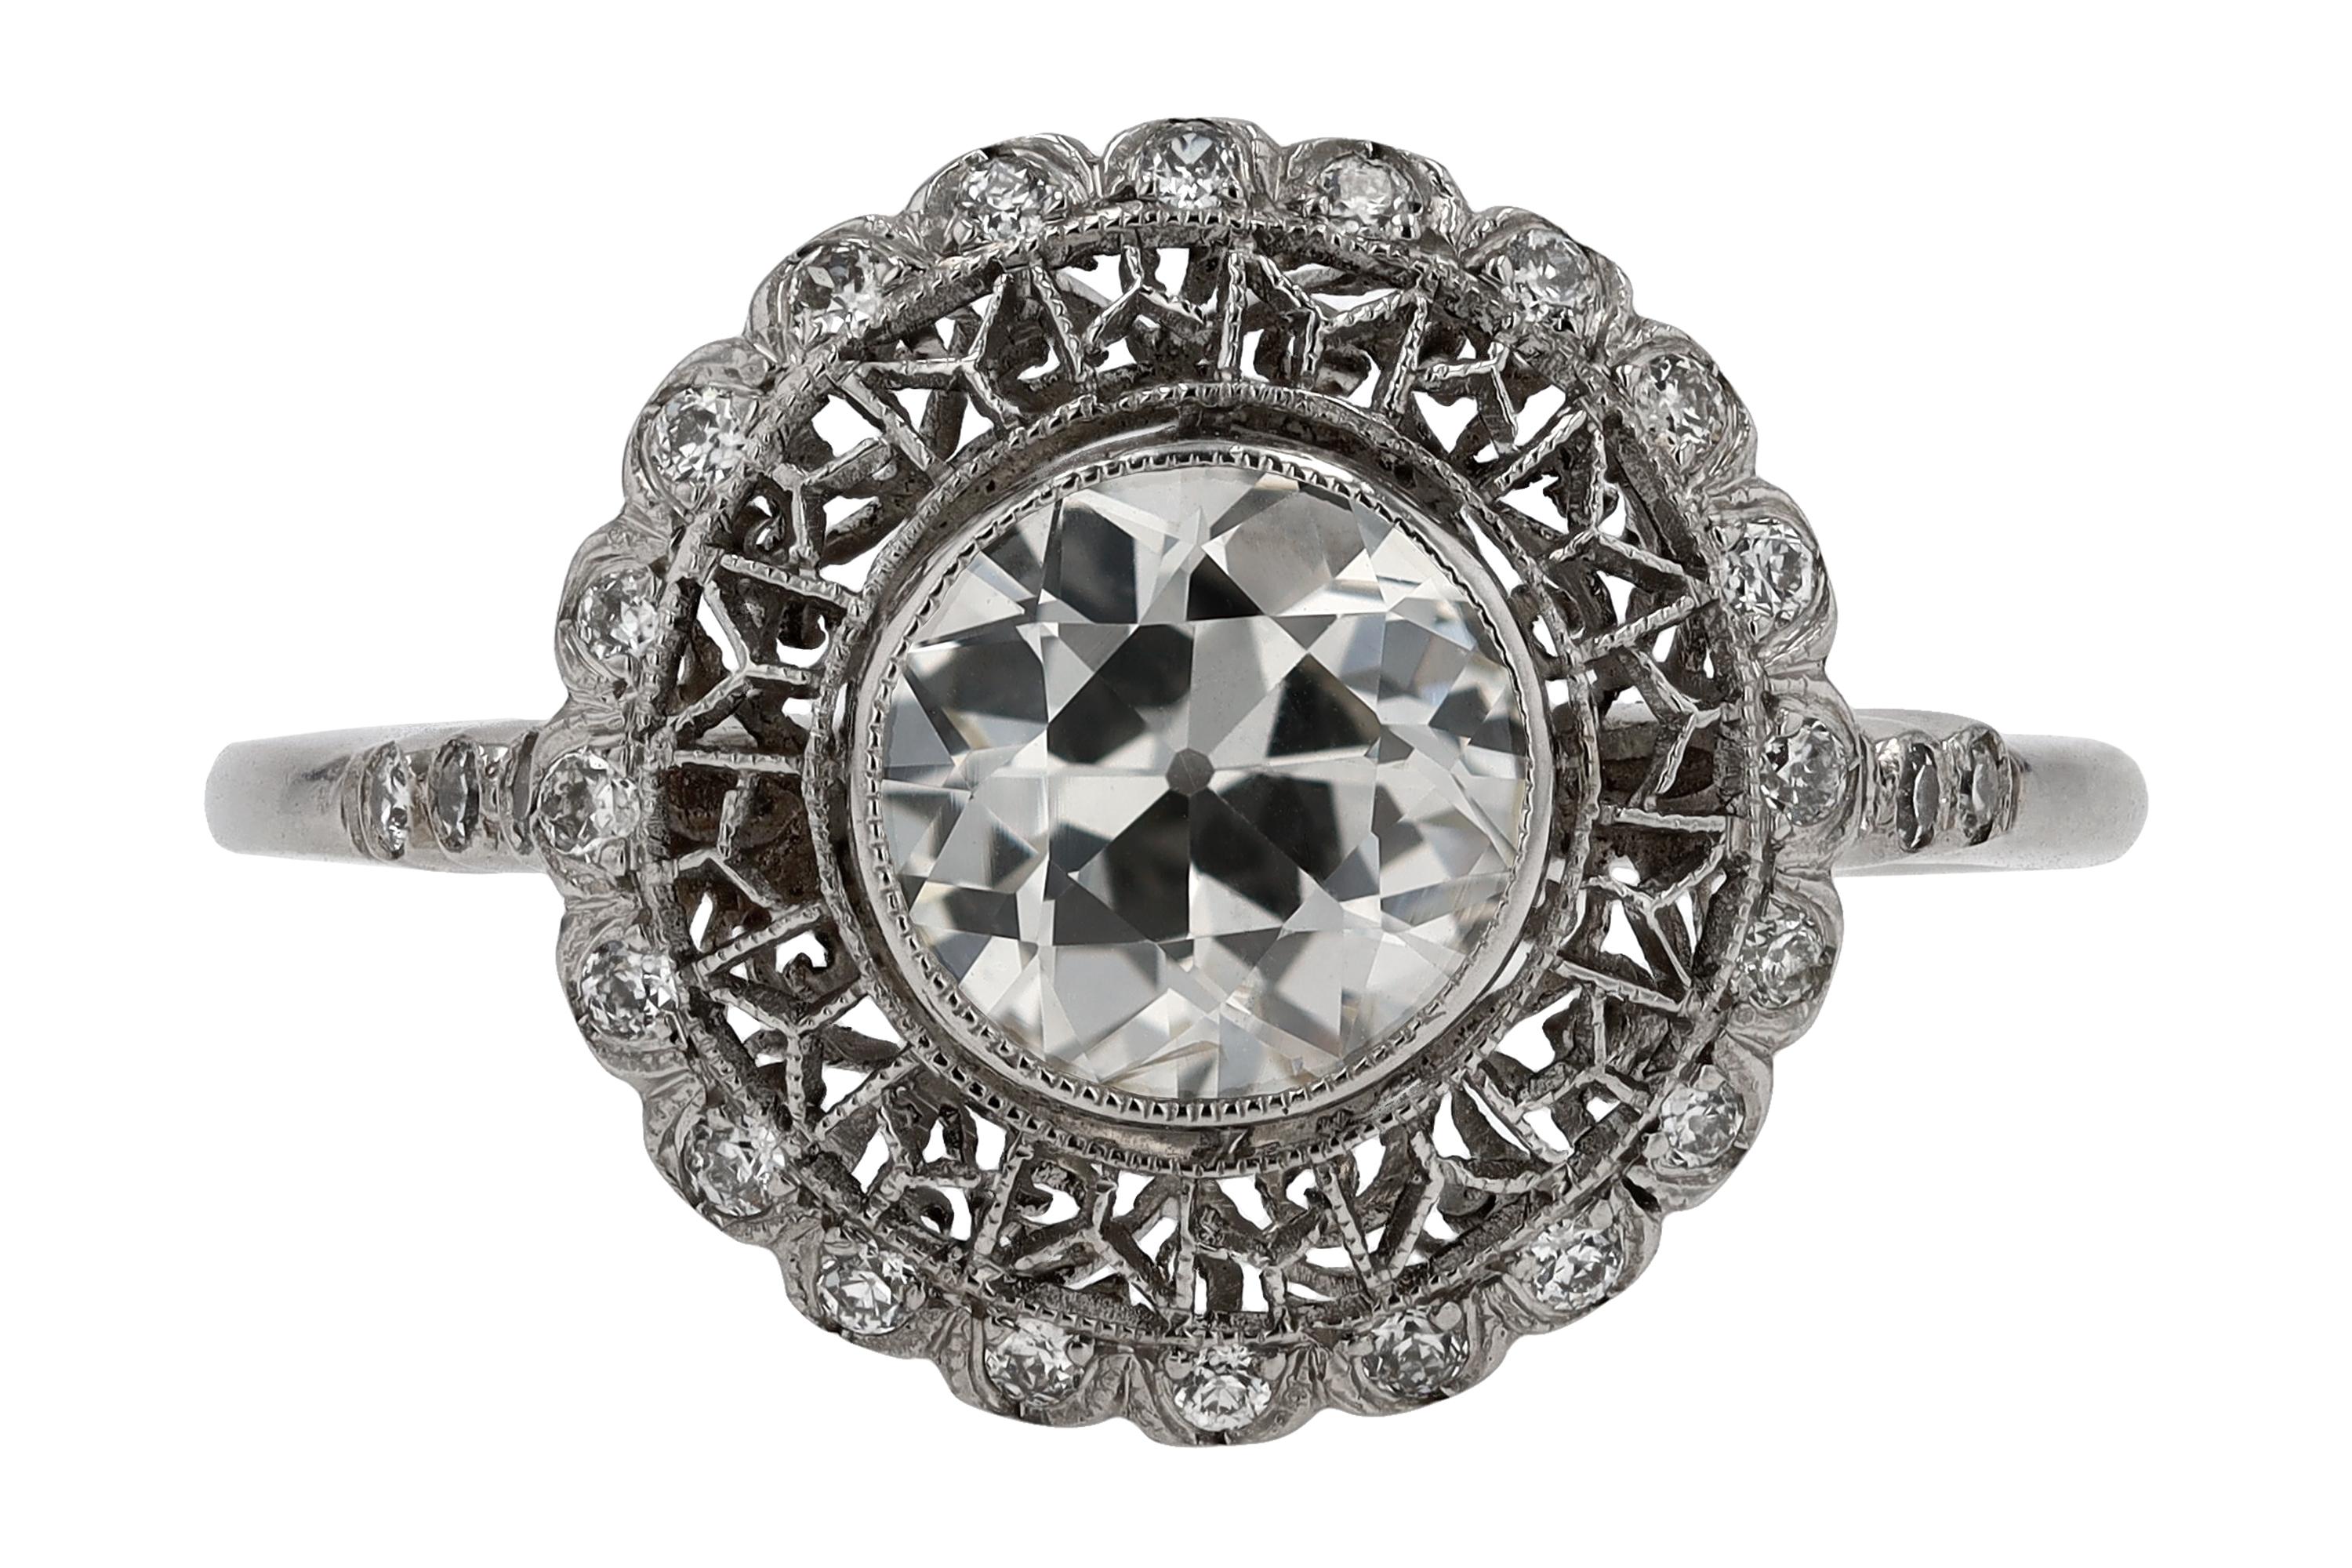 Art Deco Revival Honeycomb Filigree Diamond Engagement Ring For Sale 1